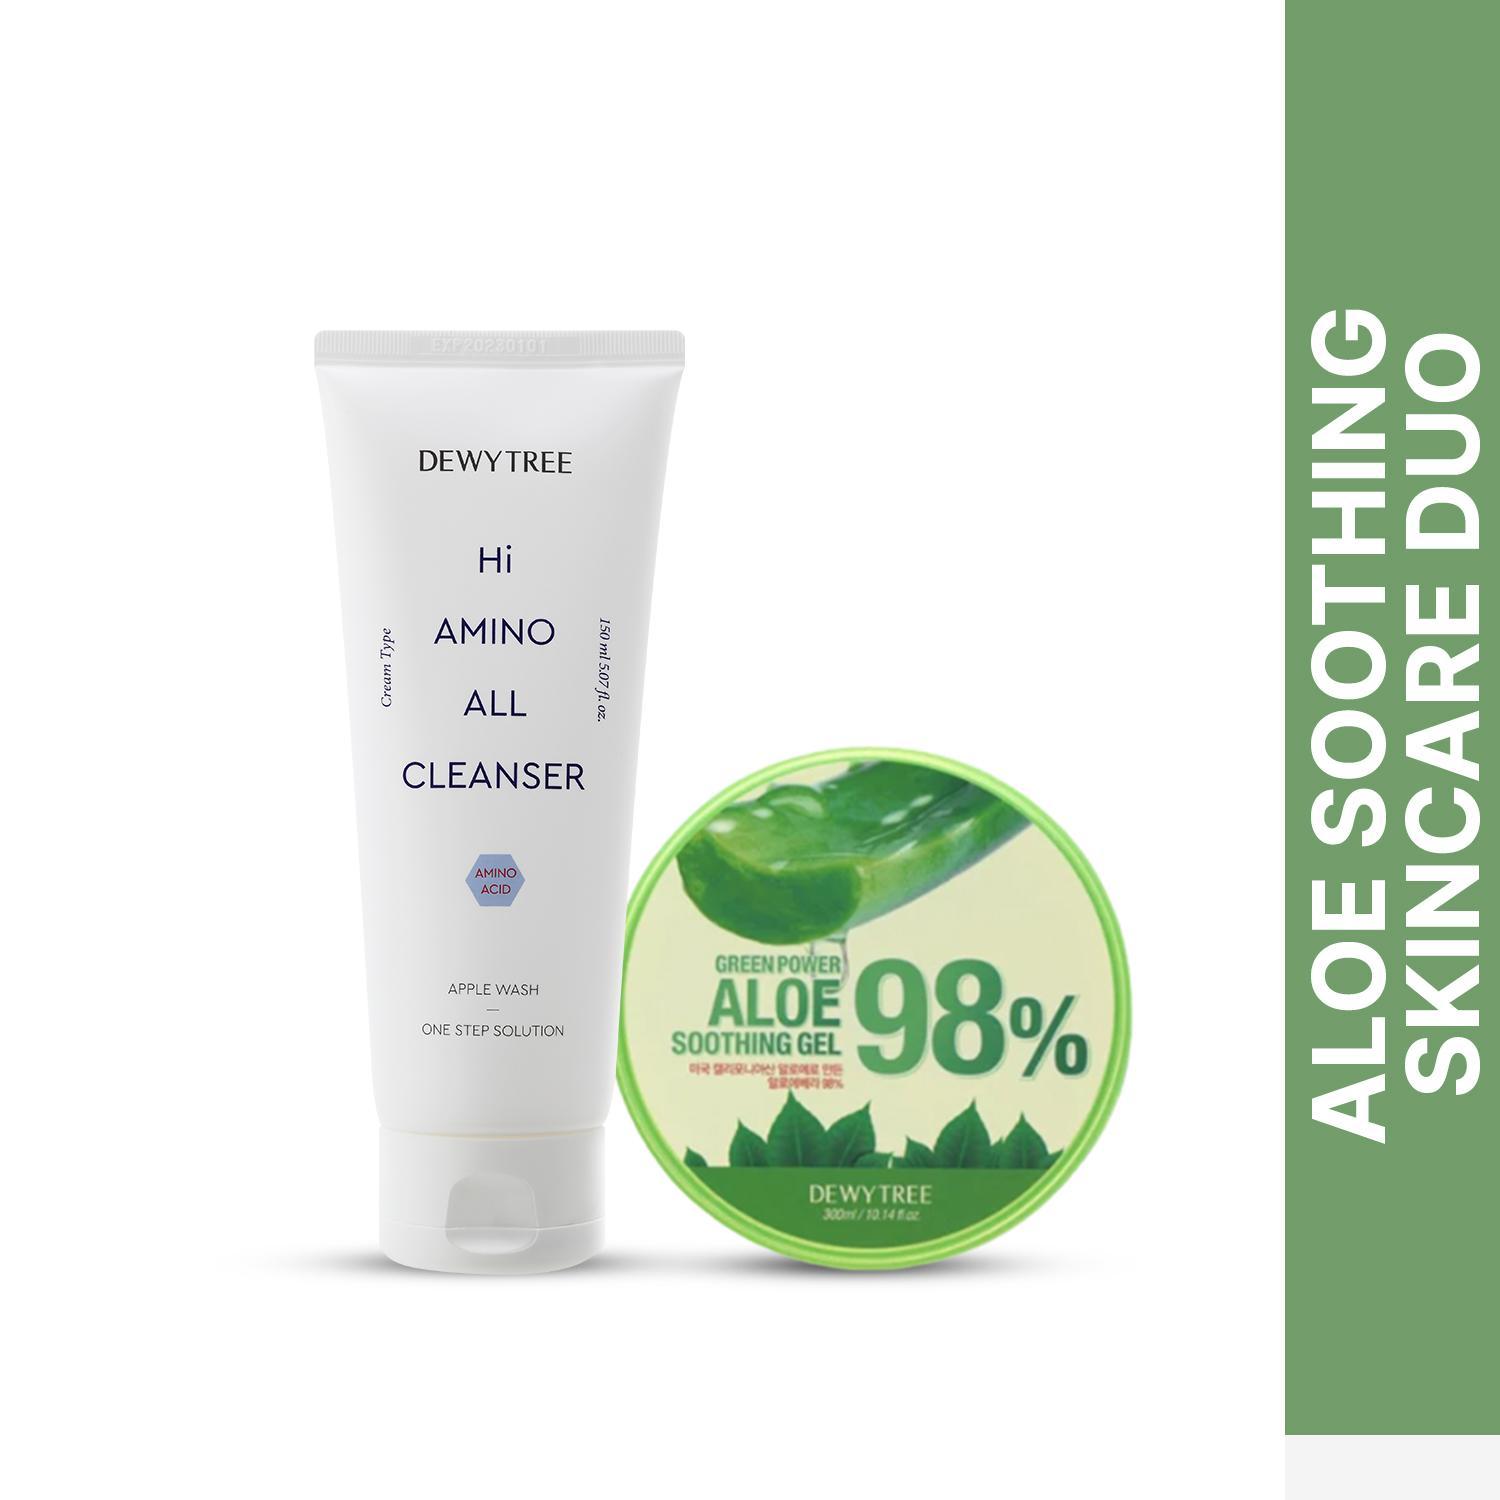 dewytree hi amino all cleanser (150 ml) & green power 98% aloe soothing gel (300 ml) combo